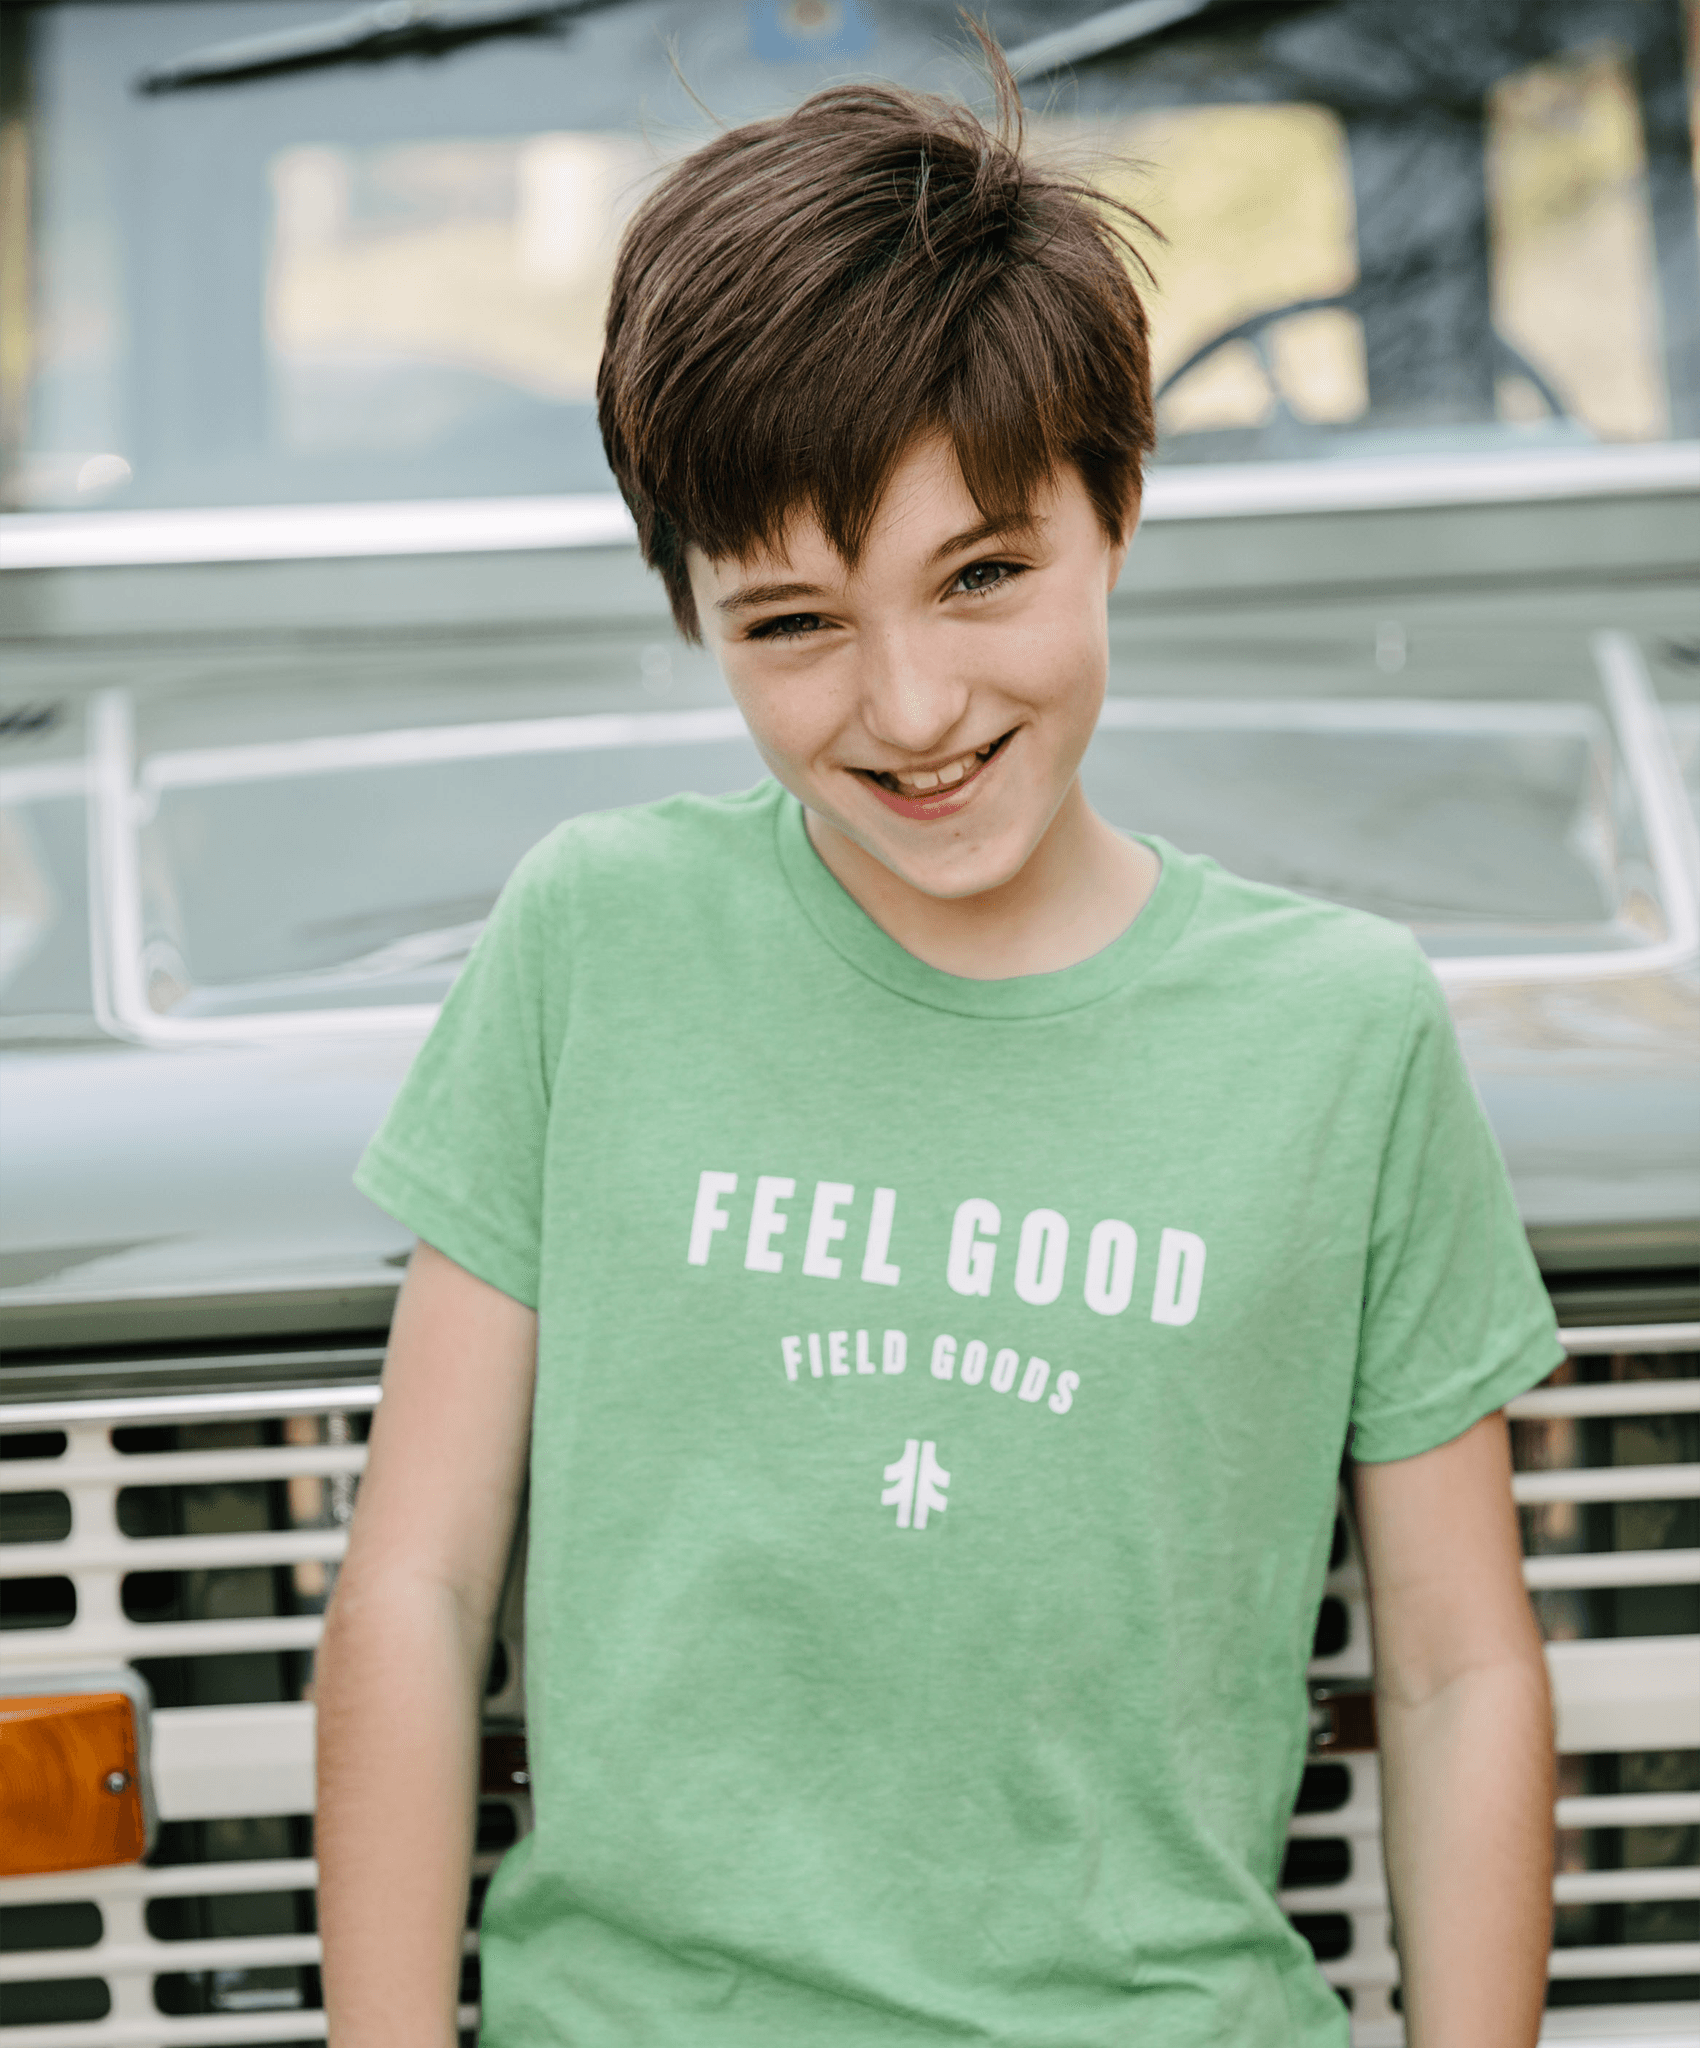 Feel Good Field Goods Youth Tee - Heather Green / White